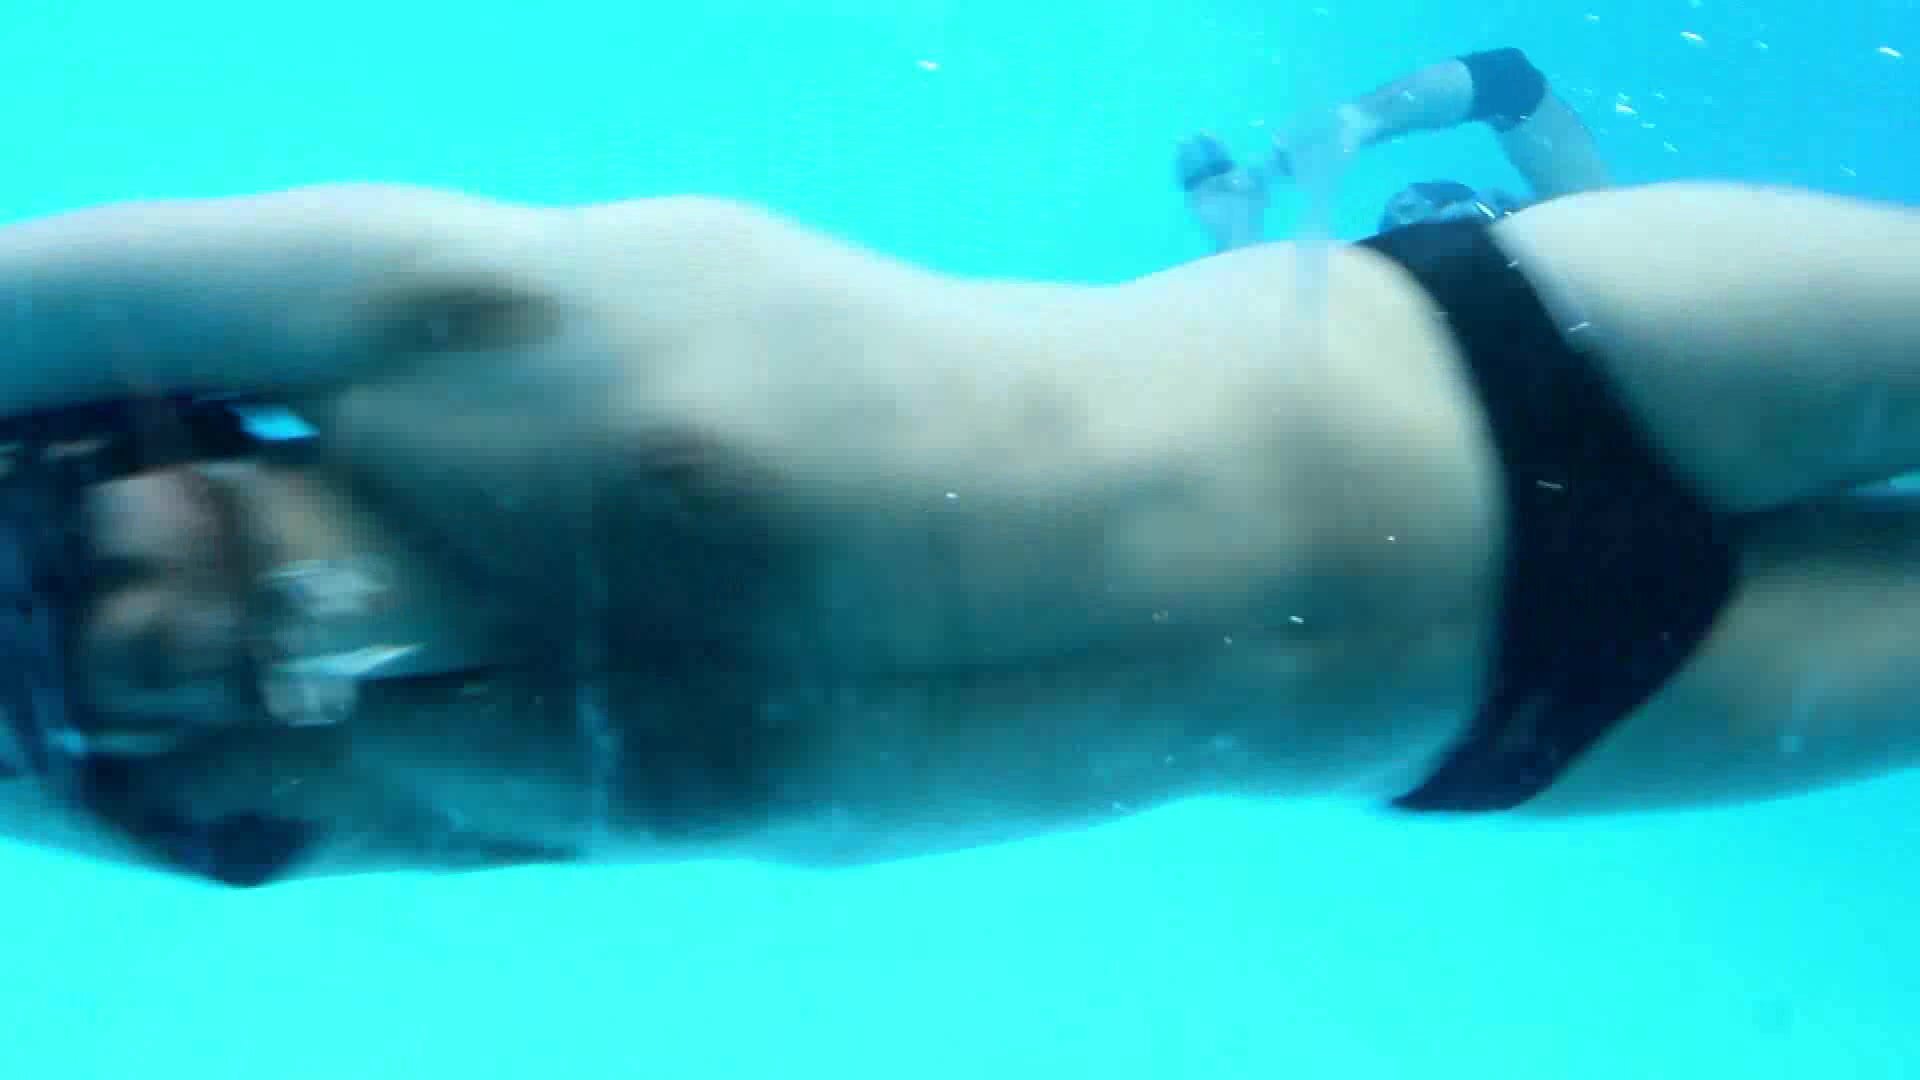 Underwater rugby players in bulging speedos